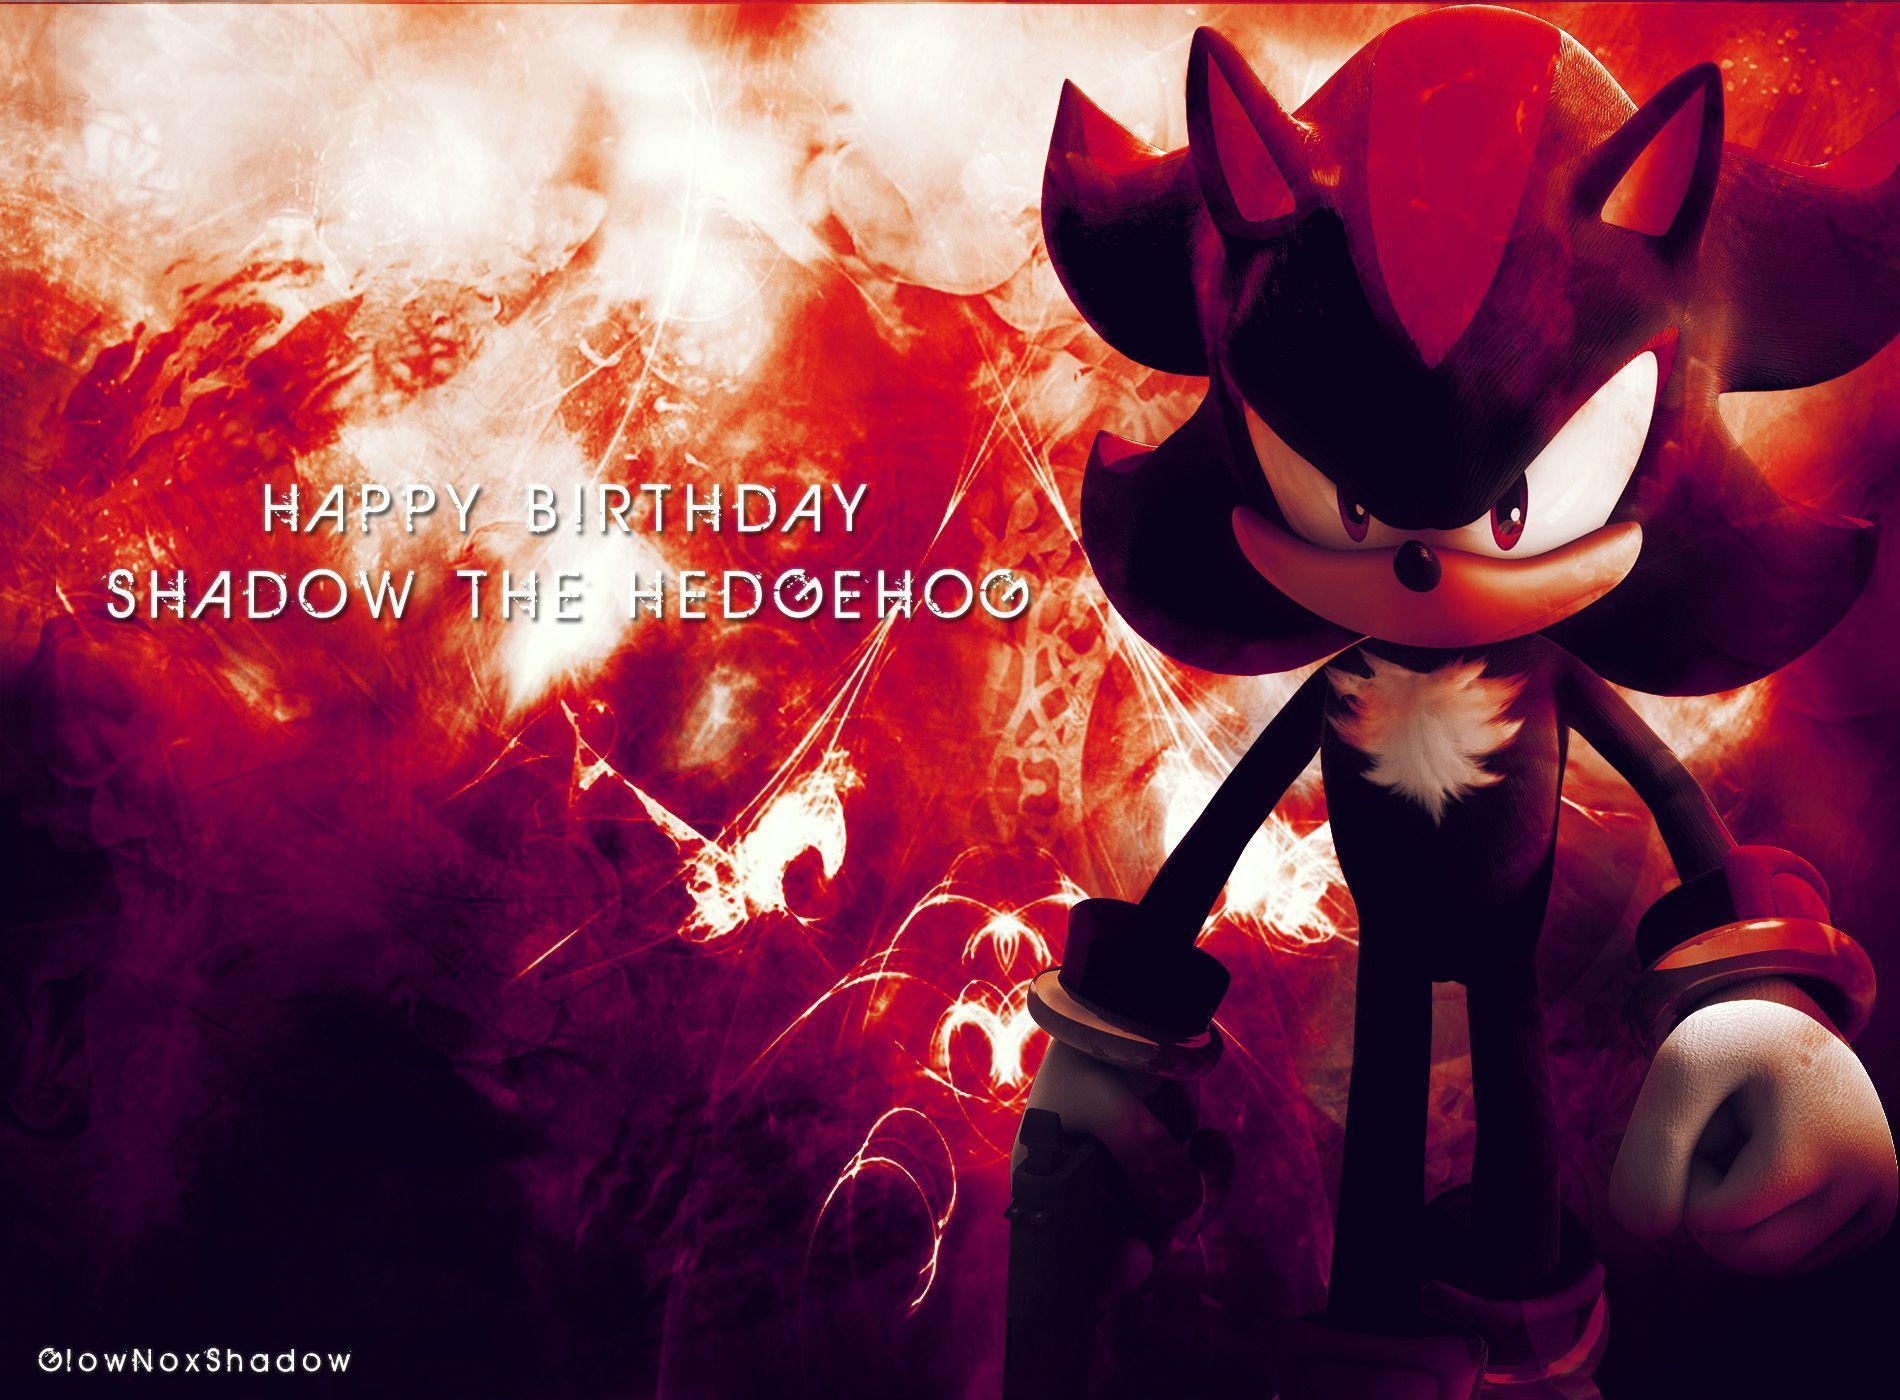 Happy Birthday Shadow The Hedgehog ~ wallpapers by GlowNoxShadow on